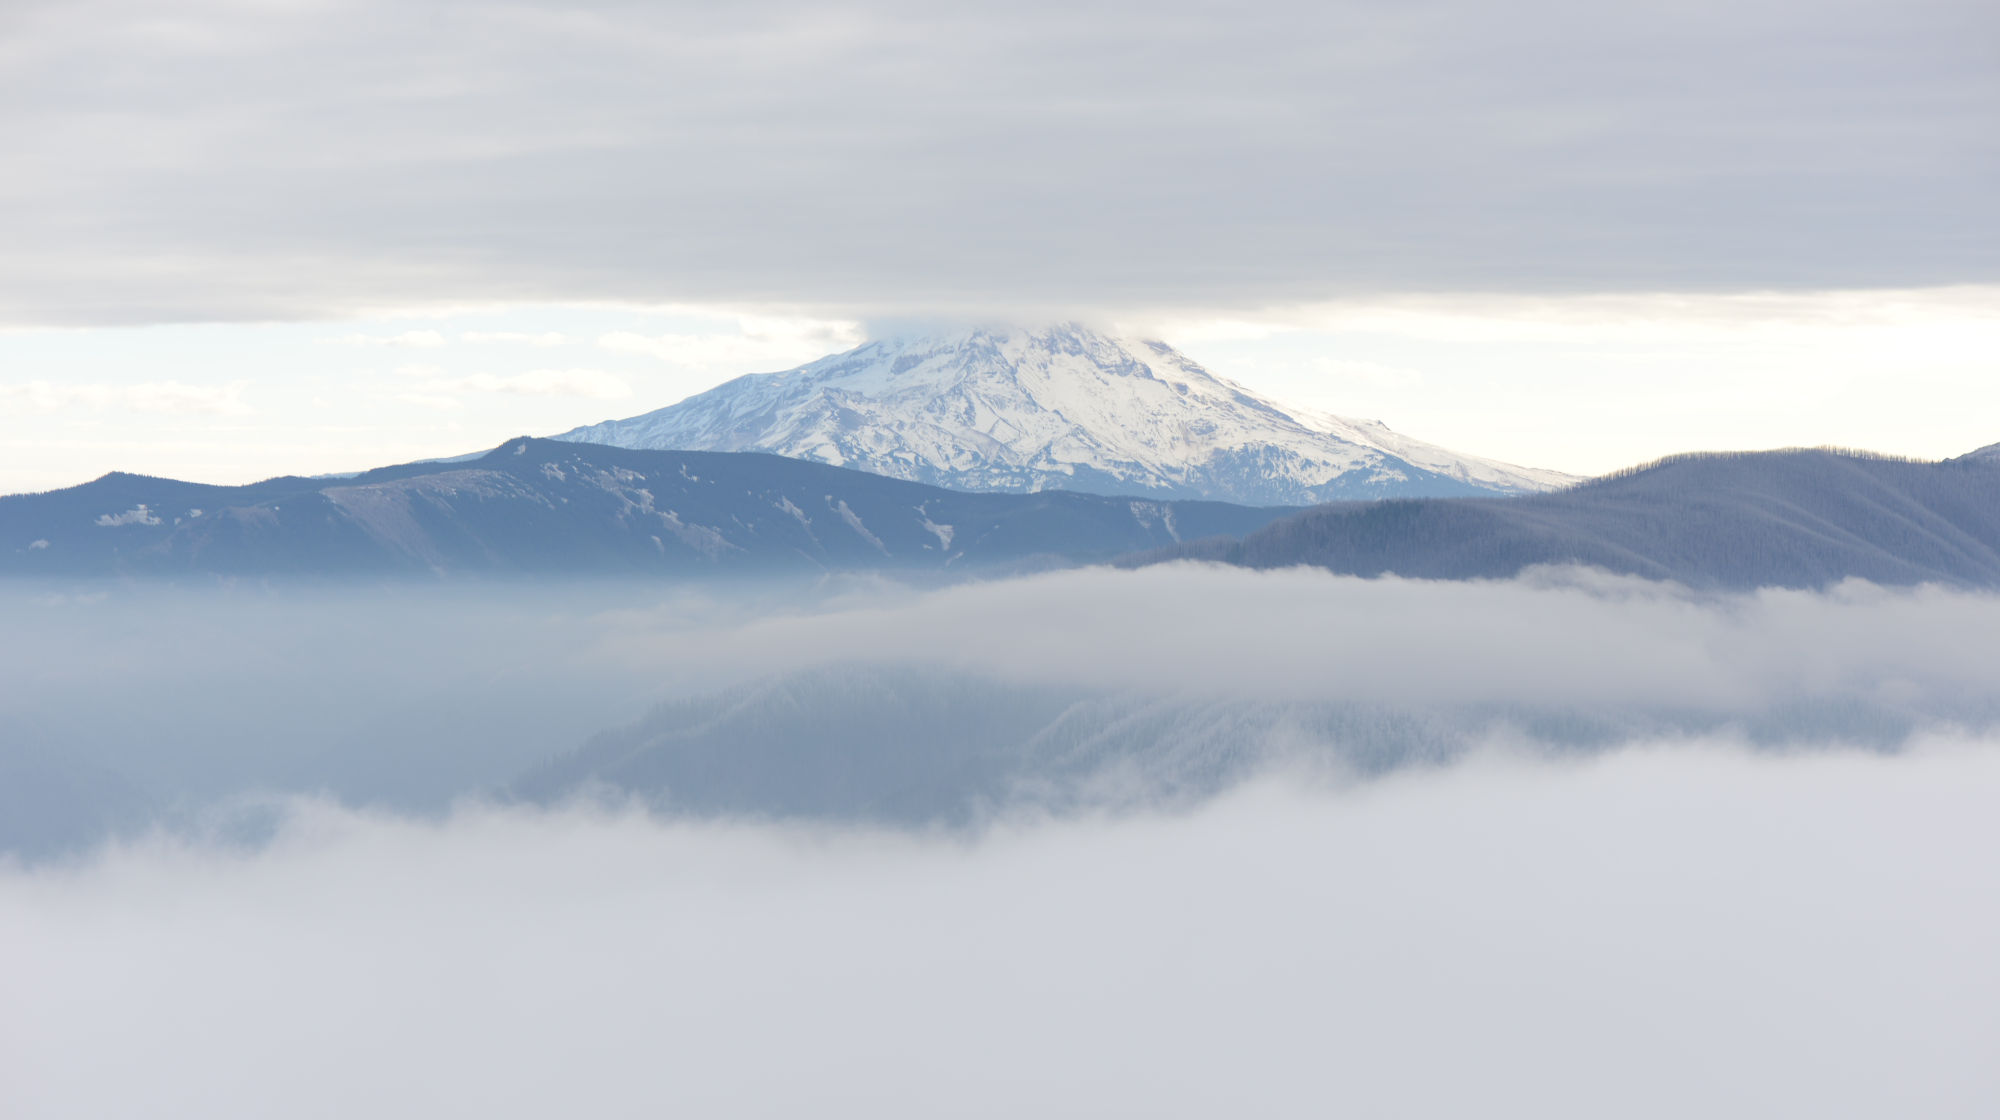 Mt. Hood in the distance in between cloud layers